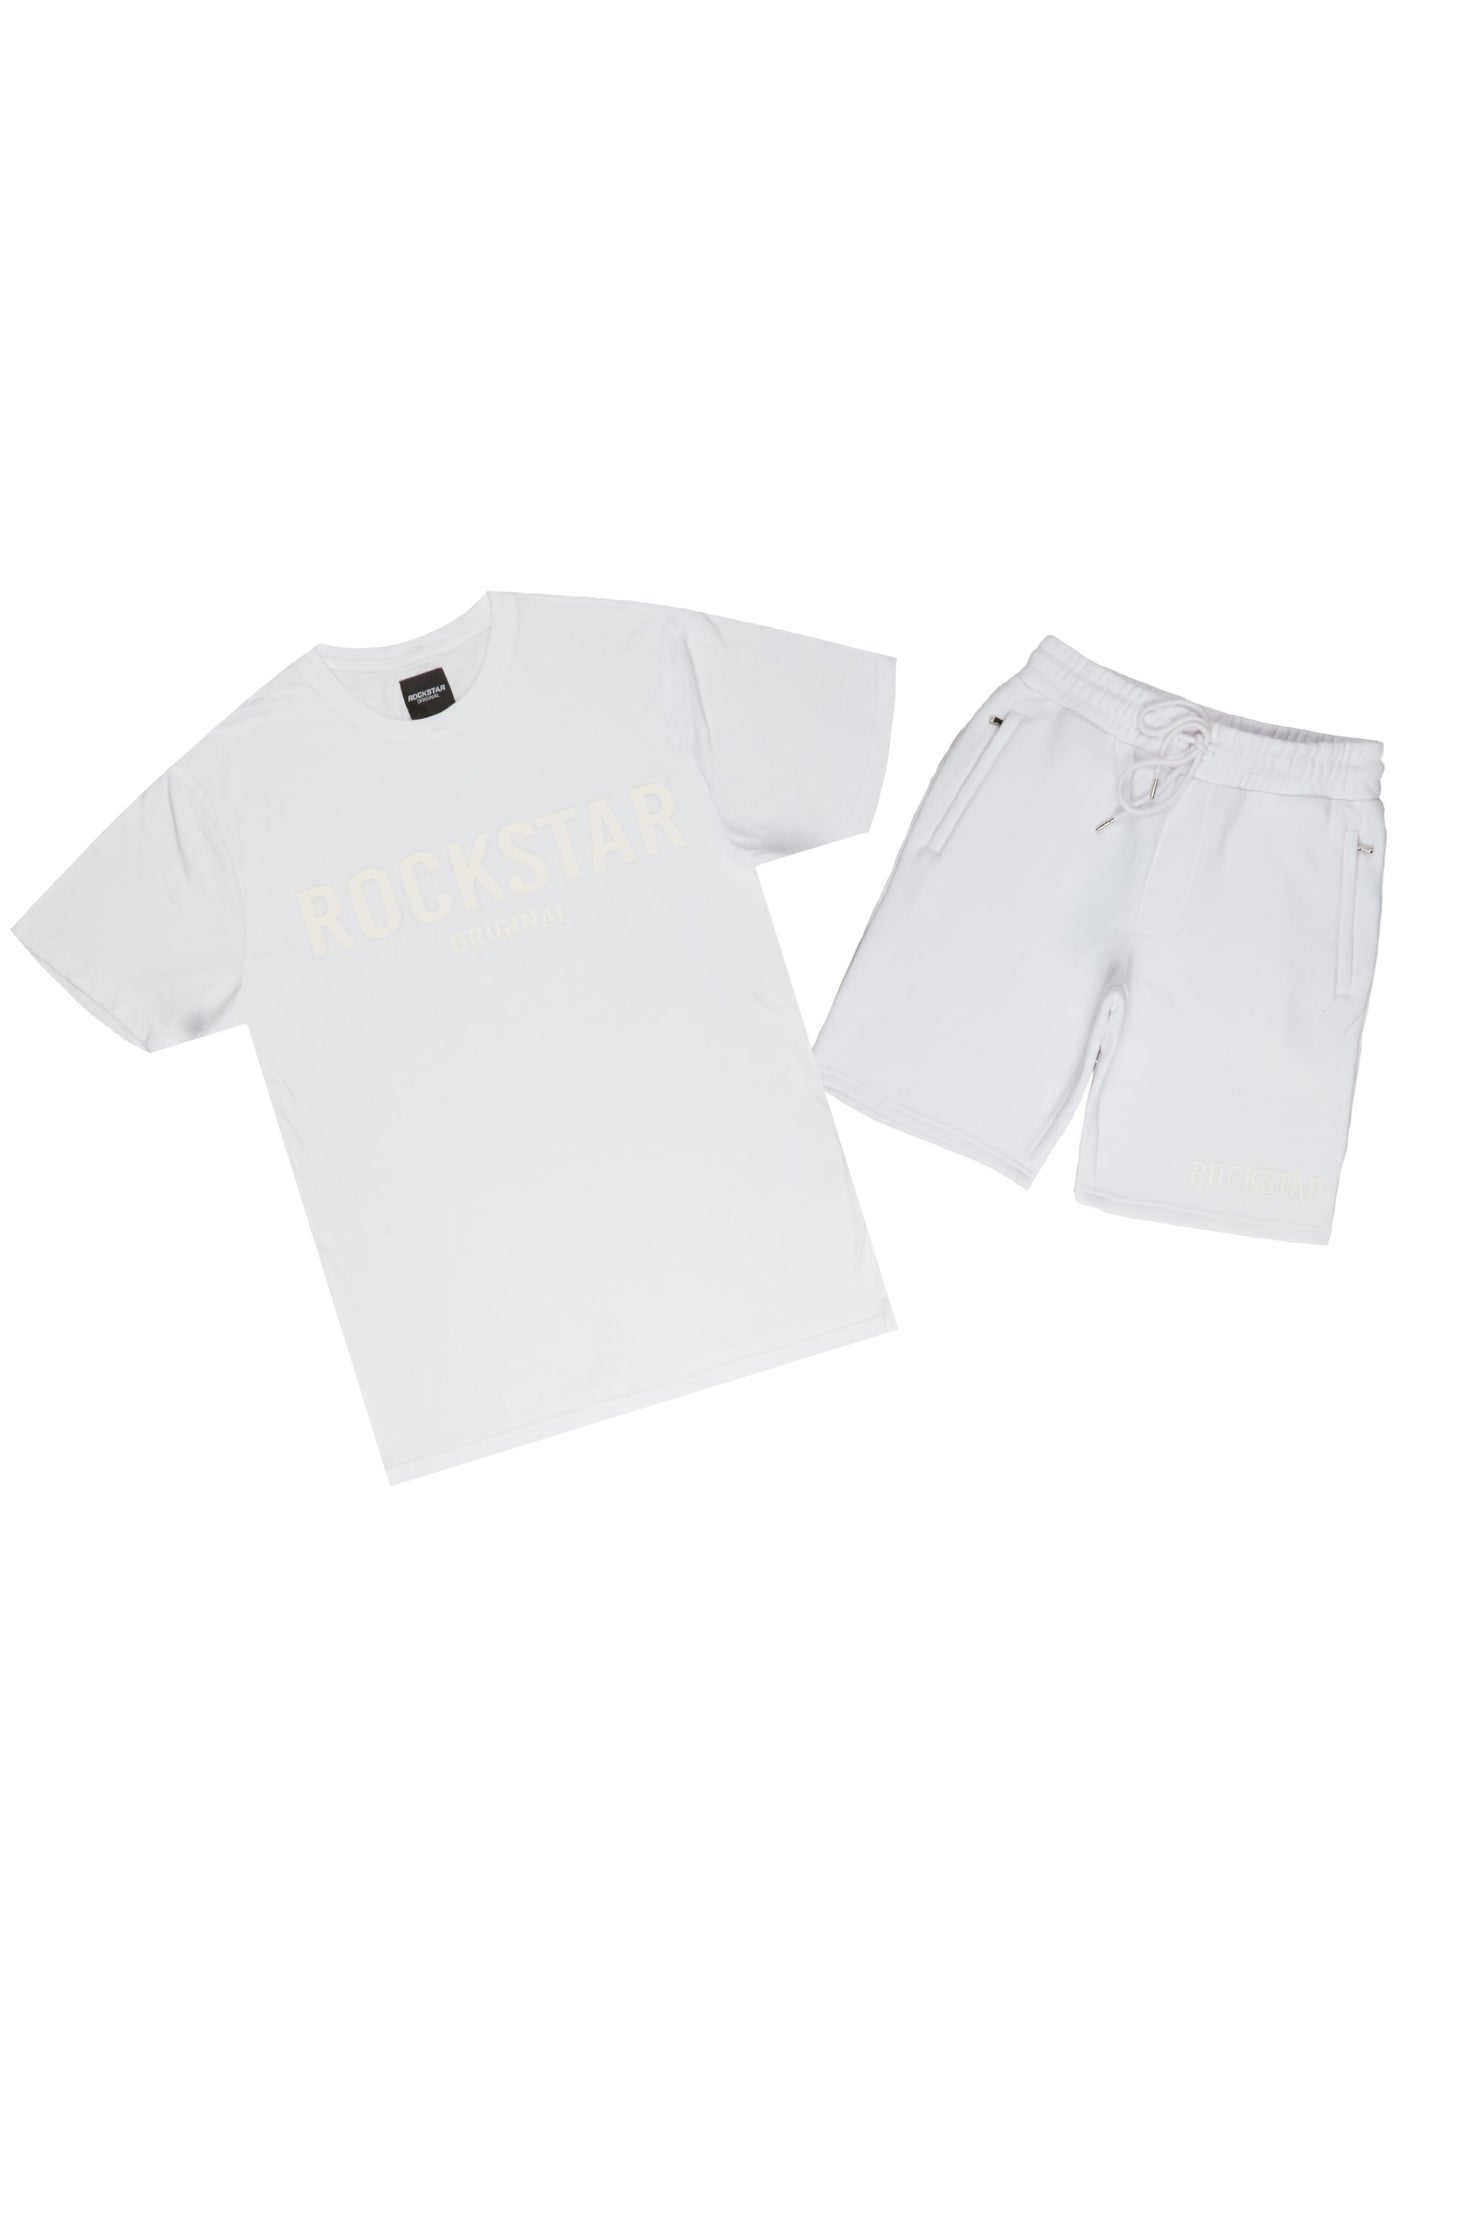 Rockstar Casey White T-Shirt/Short Set